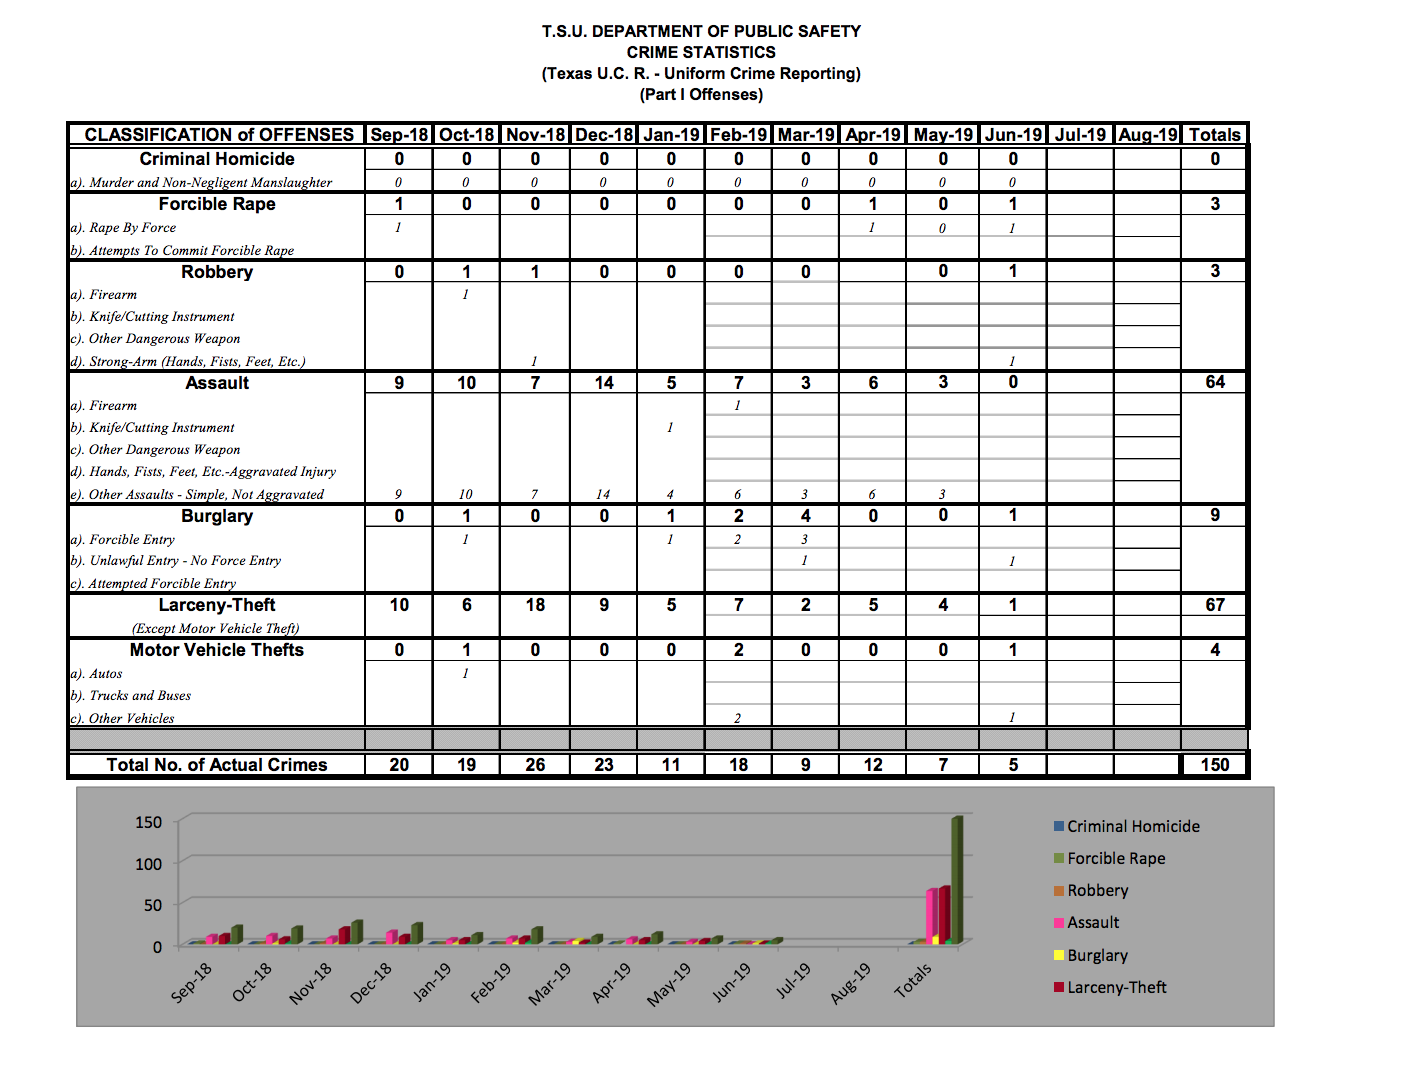 TSU DPS Crime Statistics